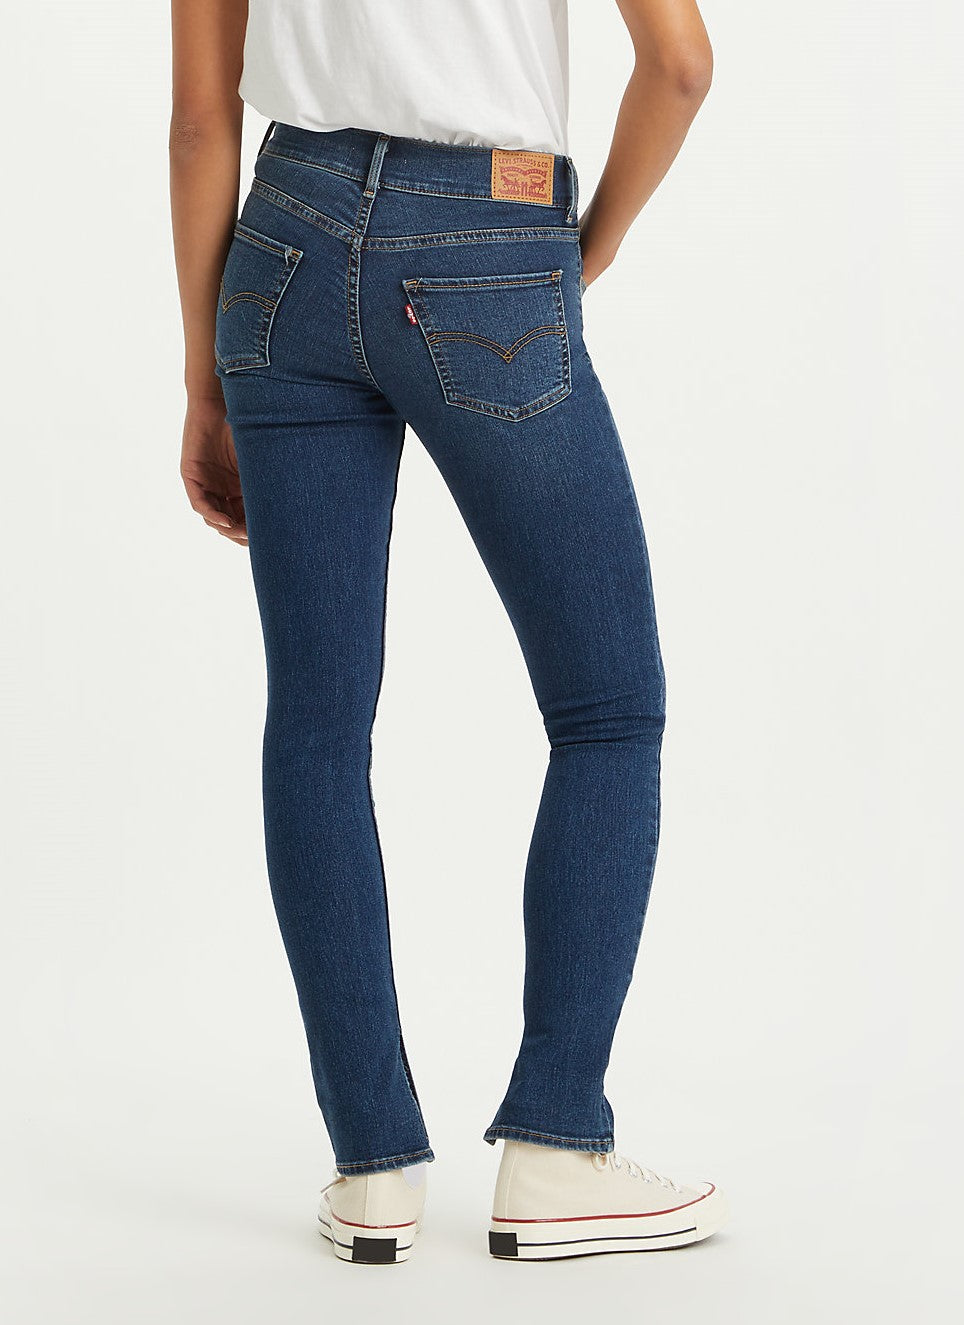 pantalones-jeans-levis-311-shaping-skinny-p-damas